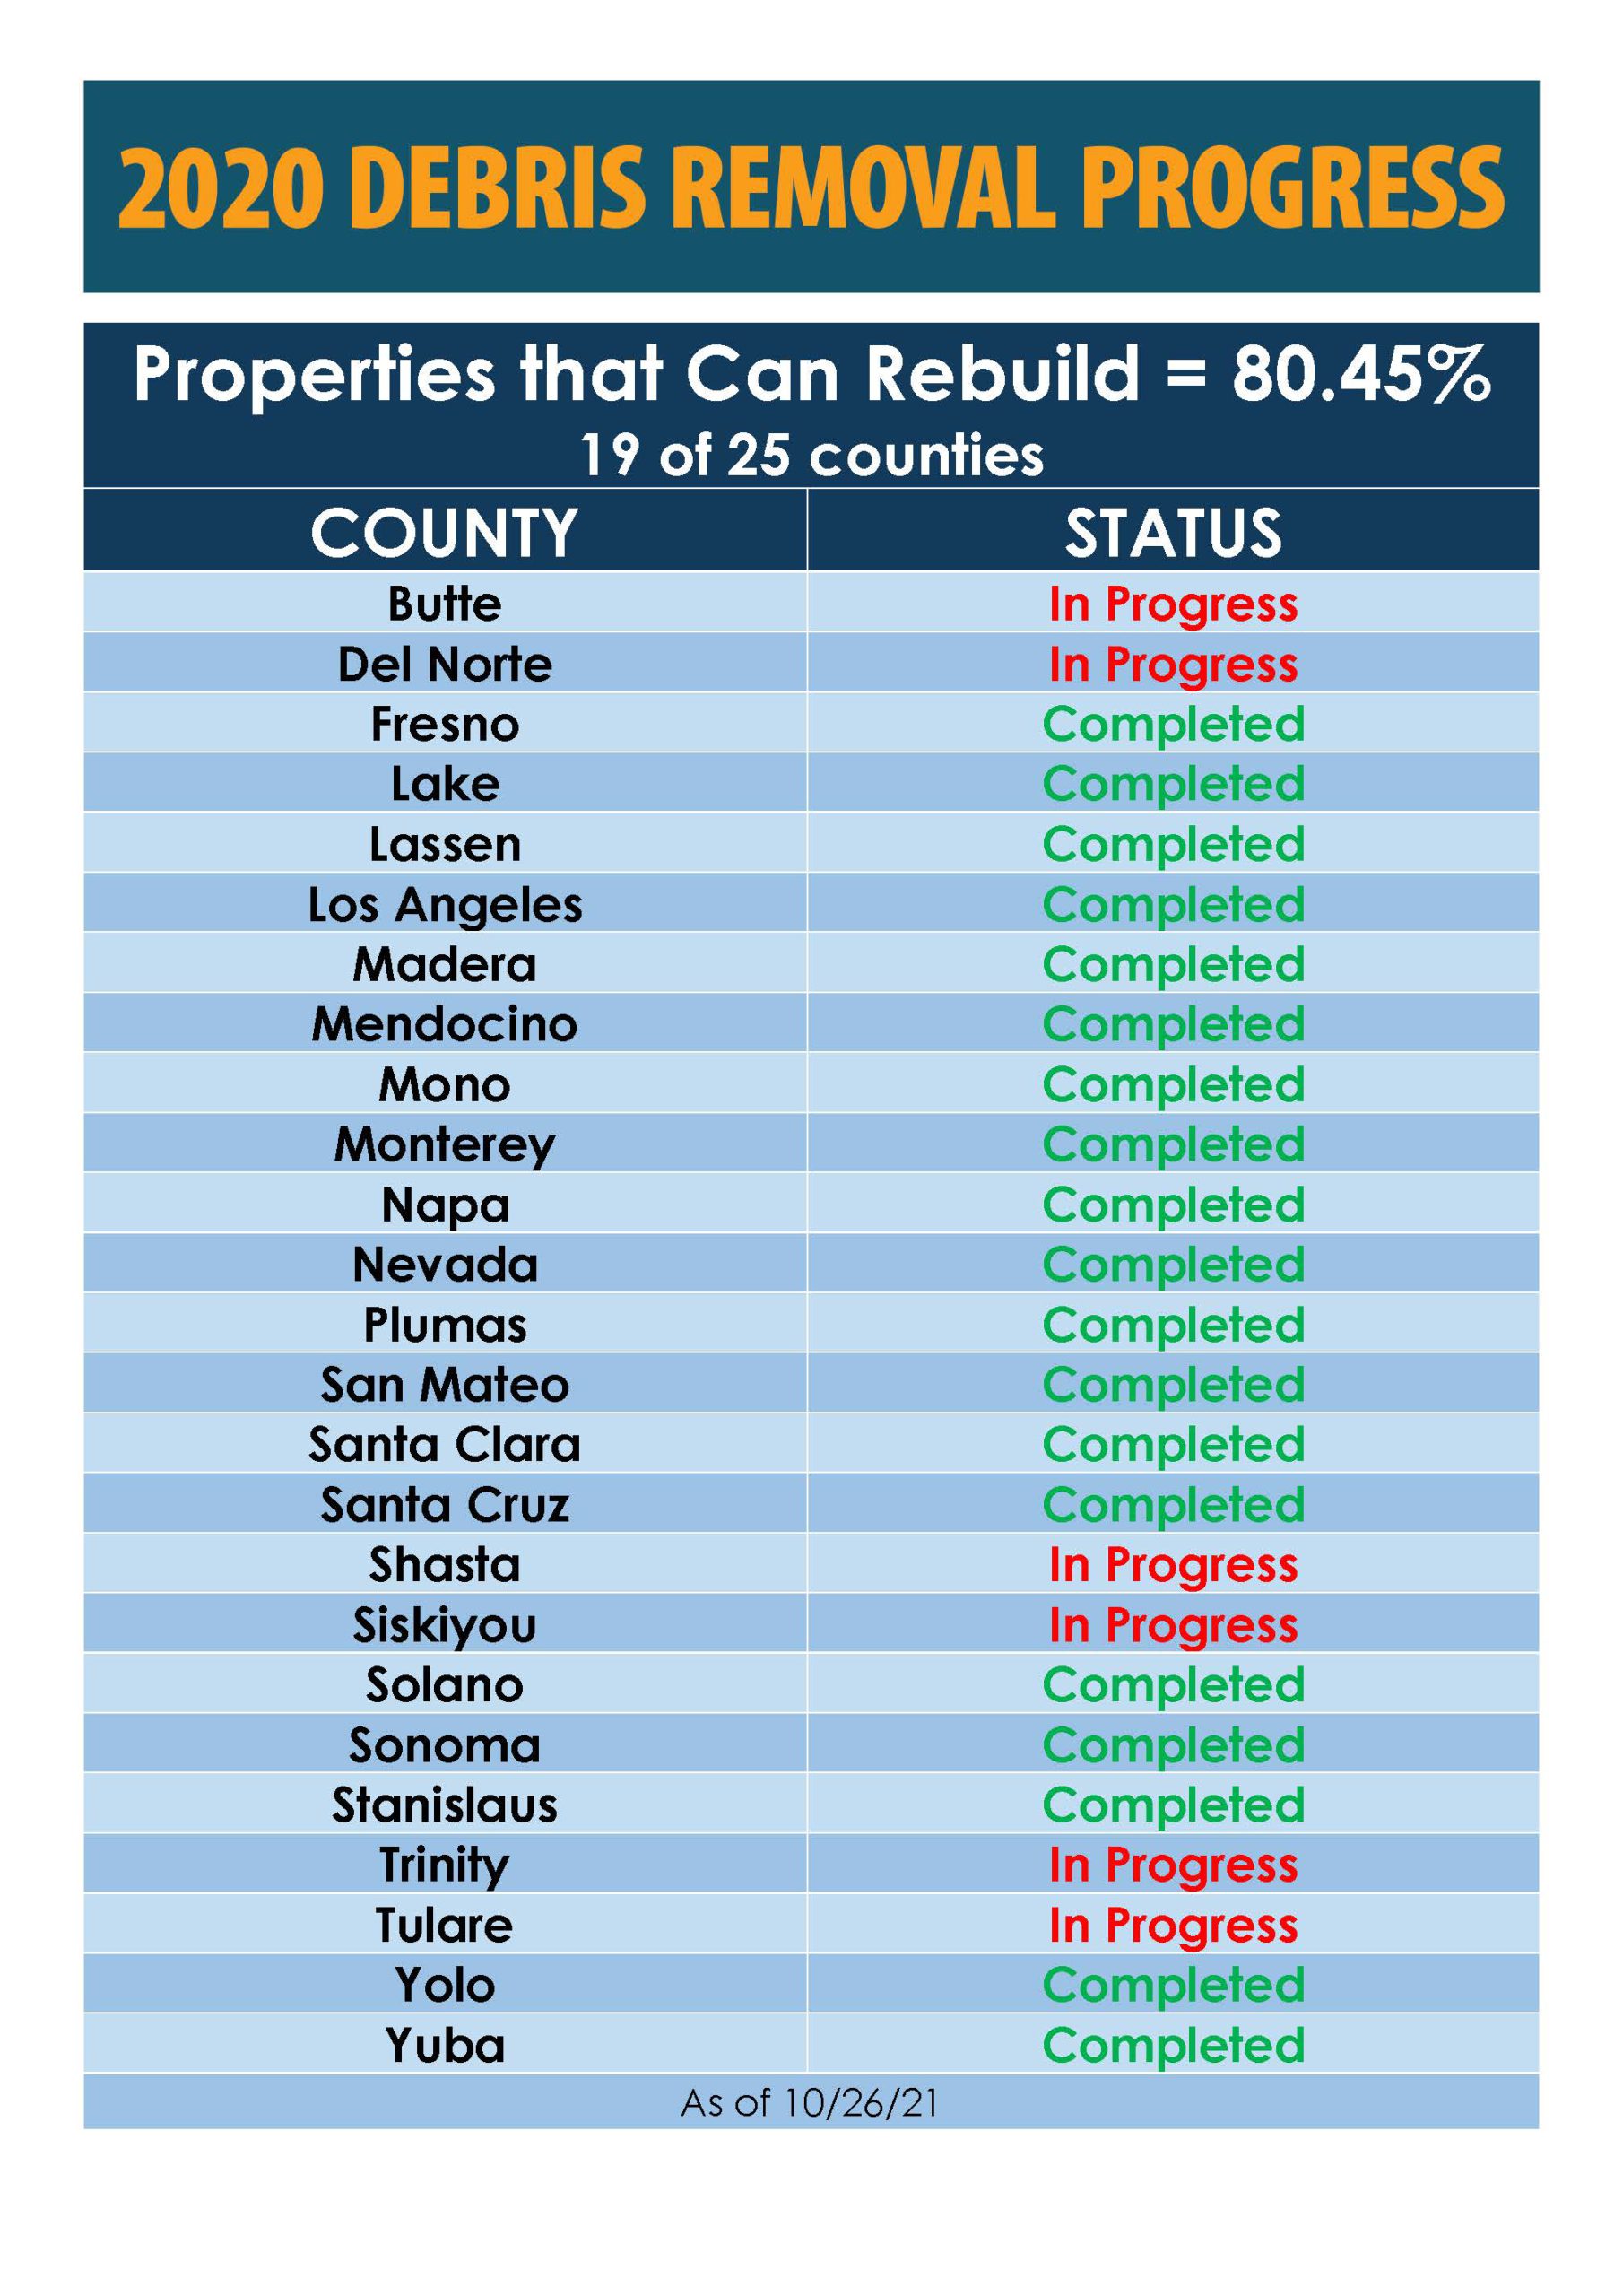 2020 Debris Removal Progress Properties that Can Rebuild=80.45% 19 of 25 counties In Progress: Butte, Del Norte, Shasta, Siskiyou, Trinity, Tulare Completed: Fresno, Lake, Lassen, Los Angeles, Madera, Mendocino, Mono, Monterey, Napa, Nevada, Plumas, San Mateo, Santa Clara, Santa Cruz, Solano, Sonoma, Stanislaus, Yolo, Yuba As of 10/26/21